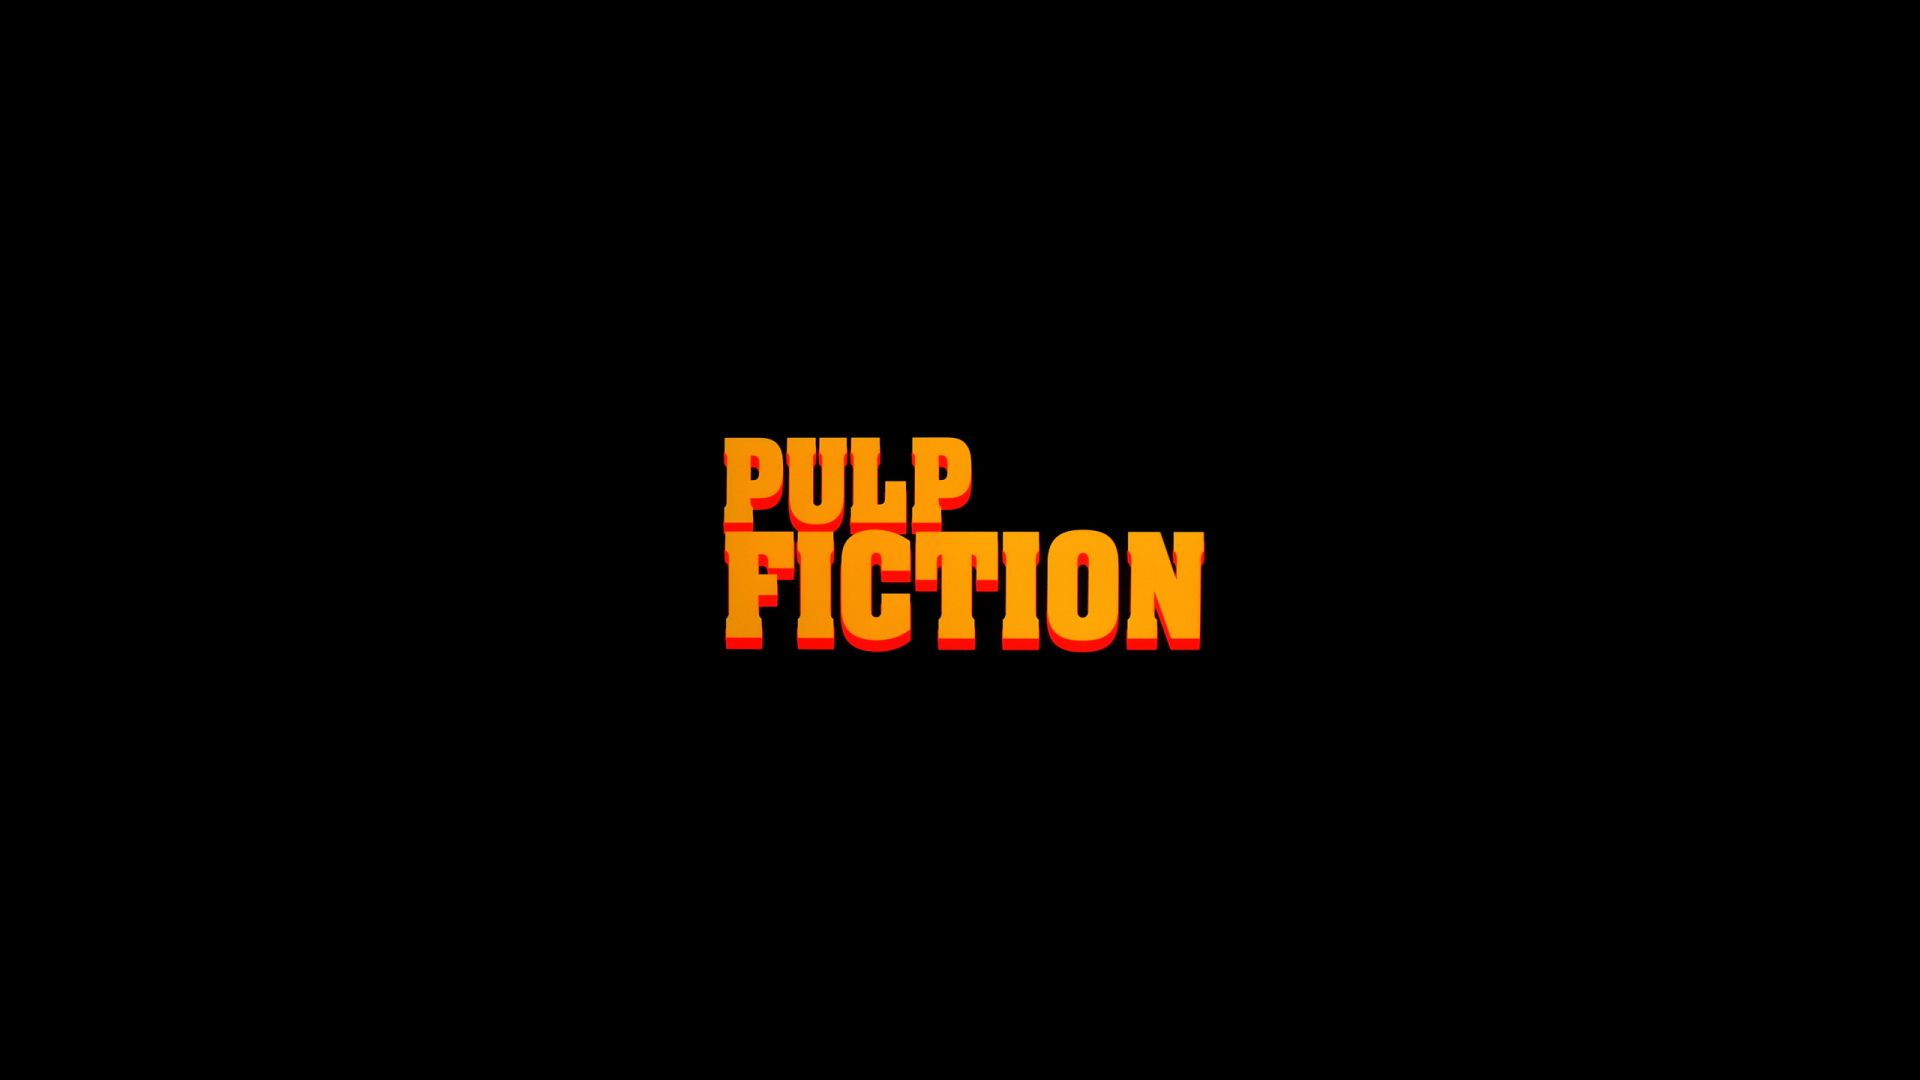 Movie Pulp Fiction Wallpaper. Pulp fiction, Fiction, Film posters minimalist